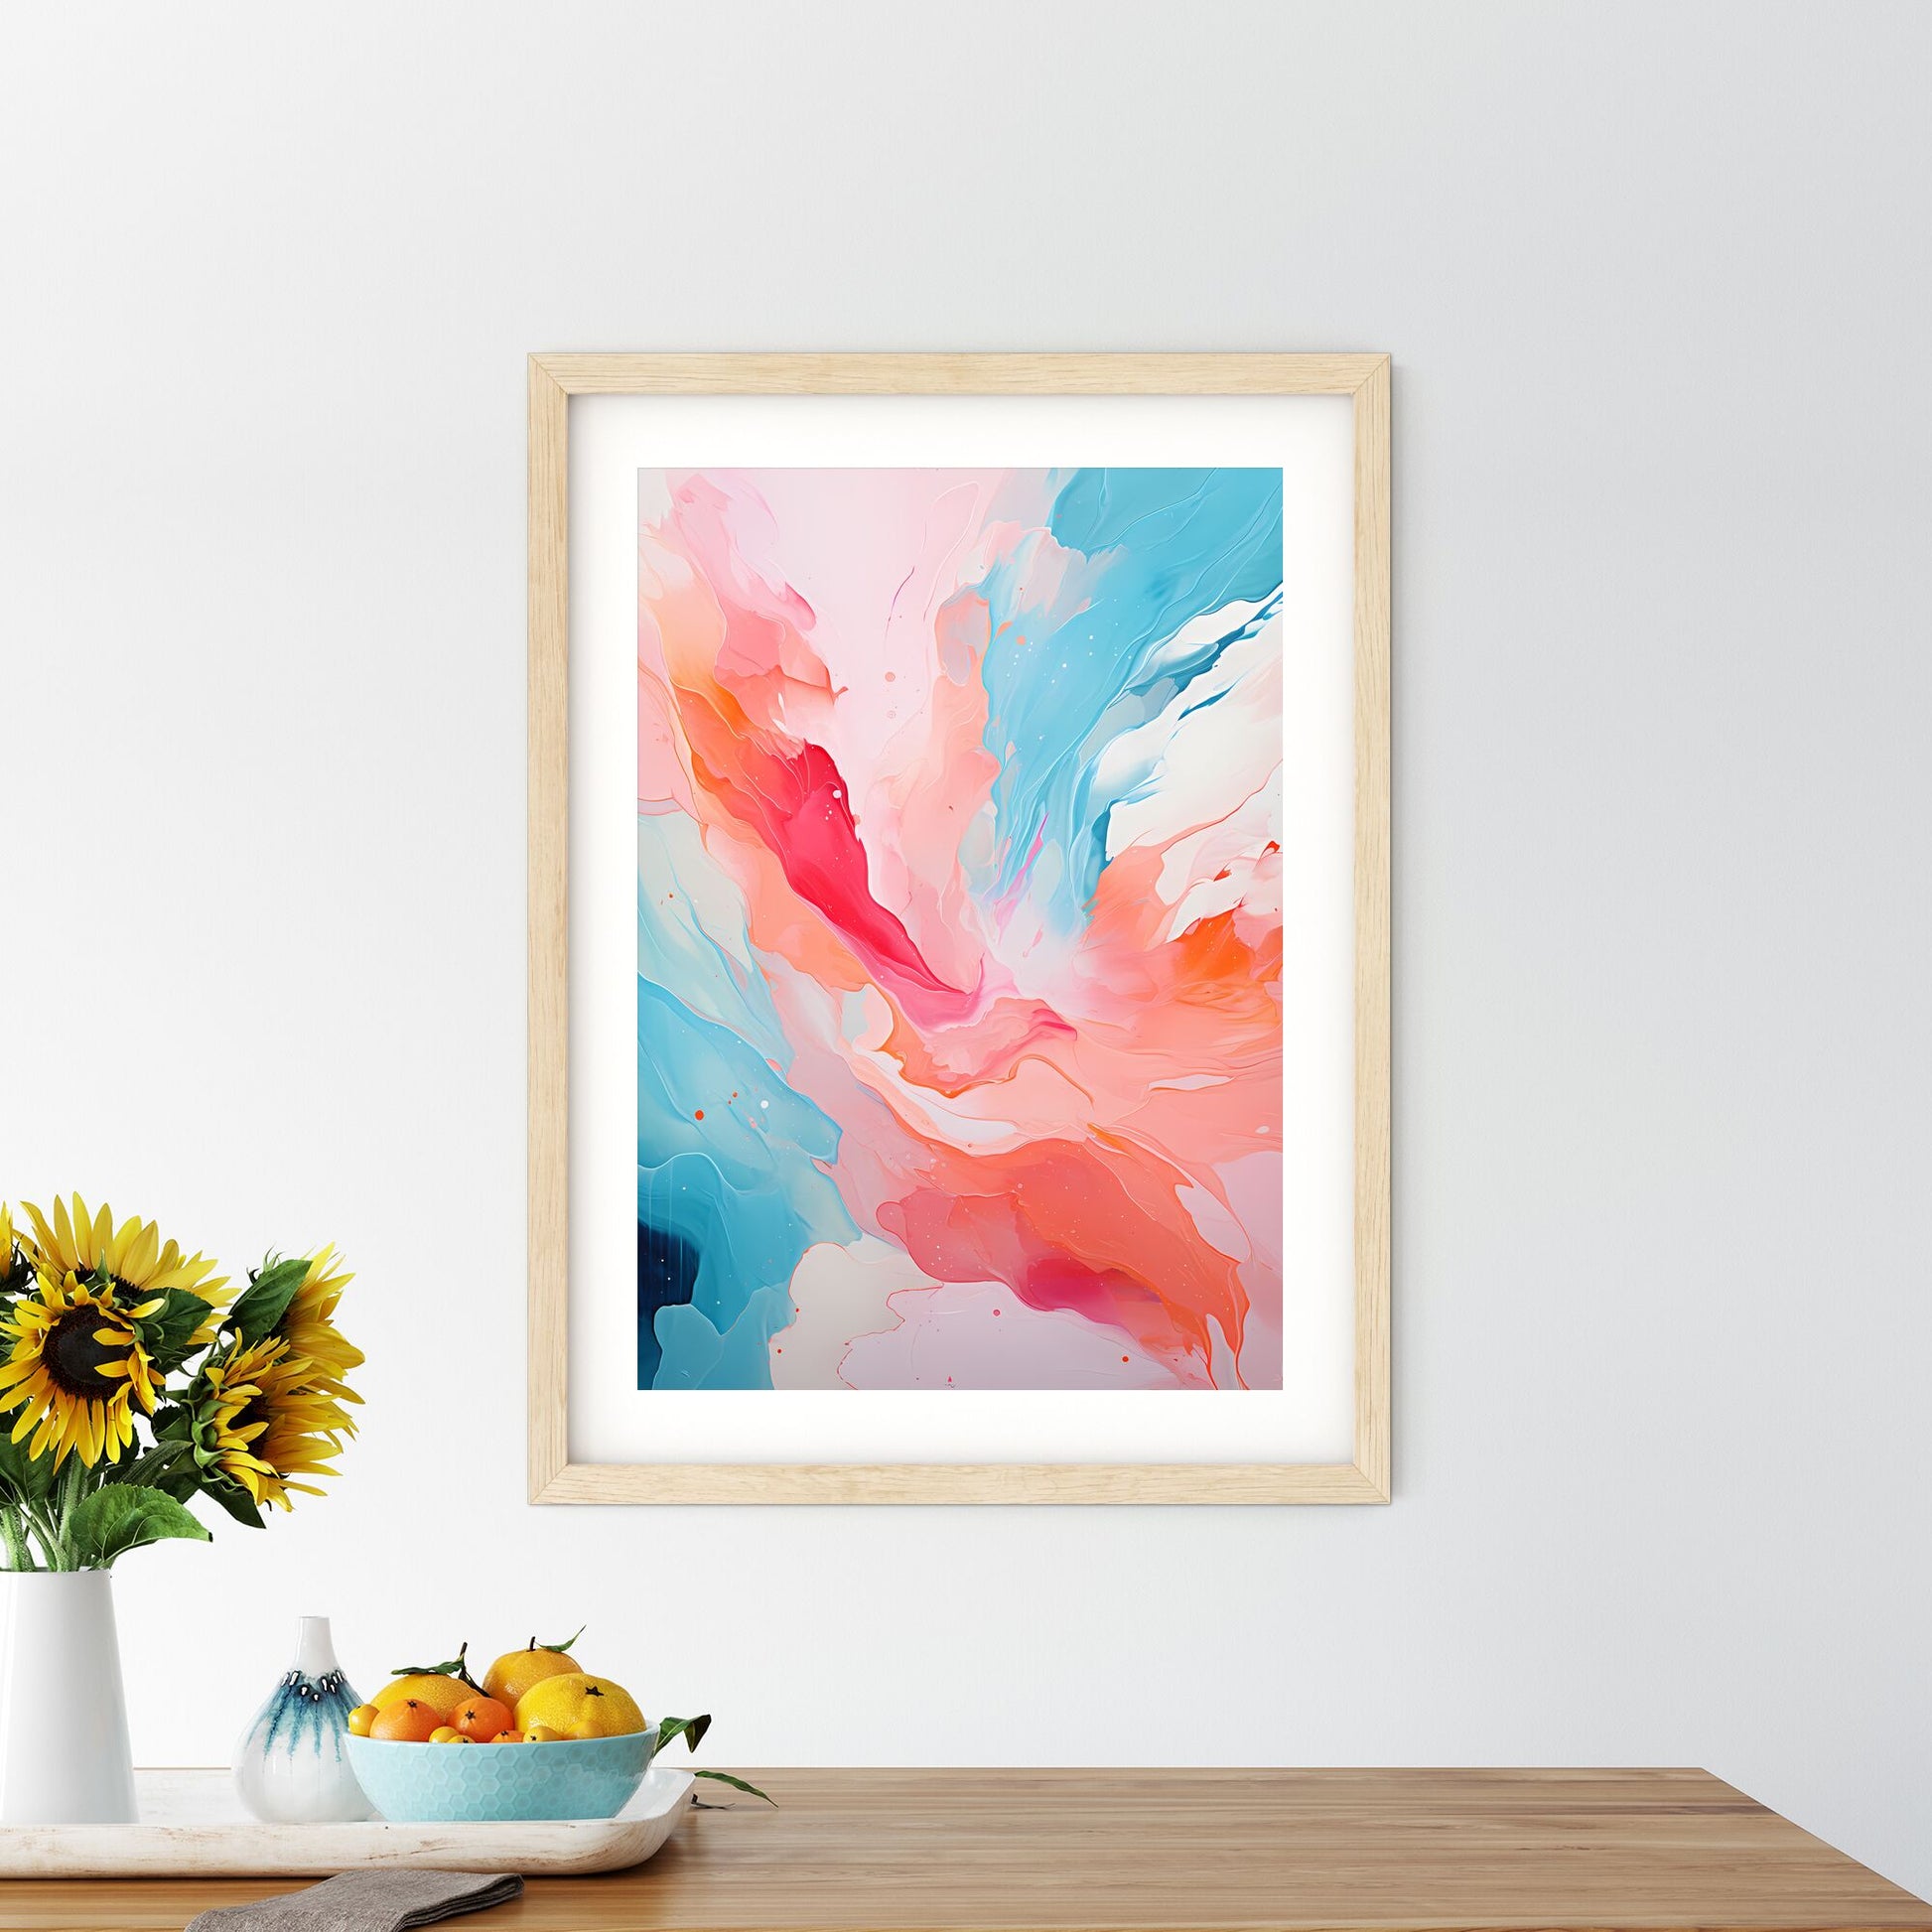 Colorful Painting Of A Cloud Of Paint Art Print Default Title